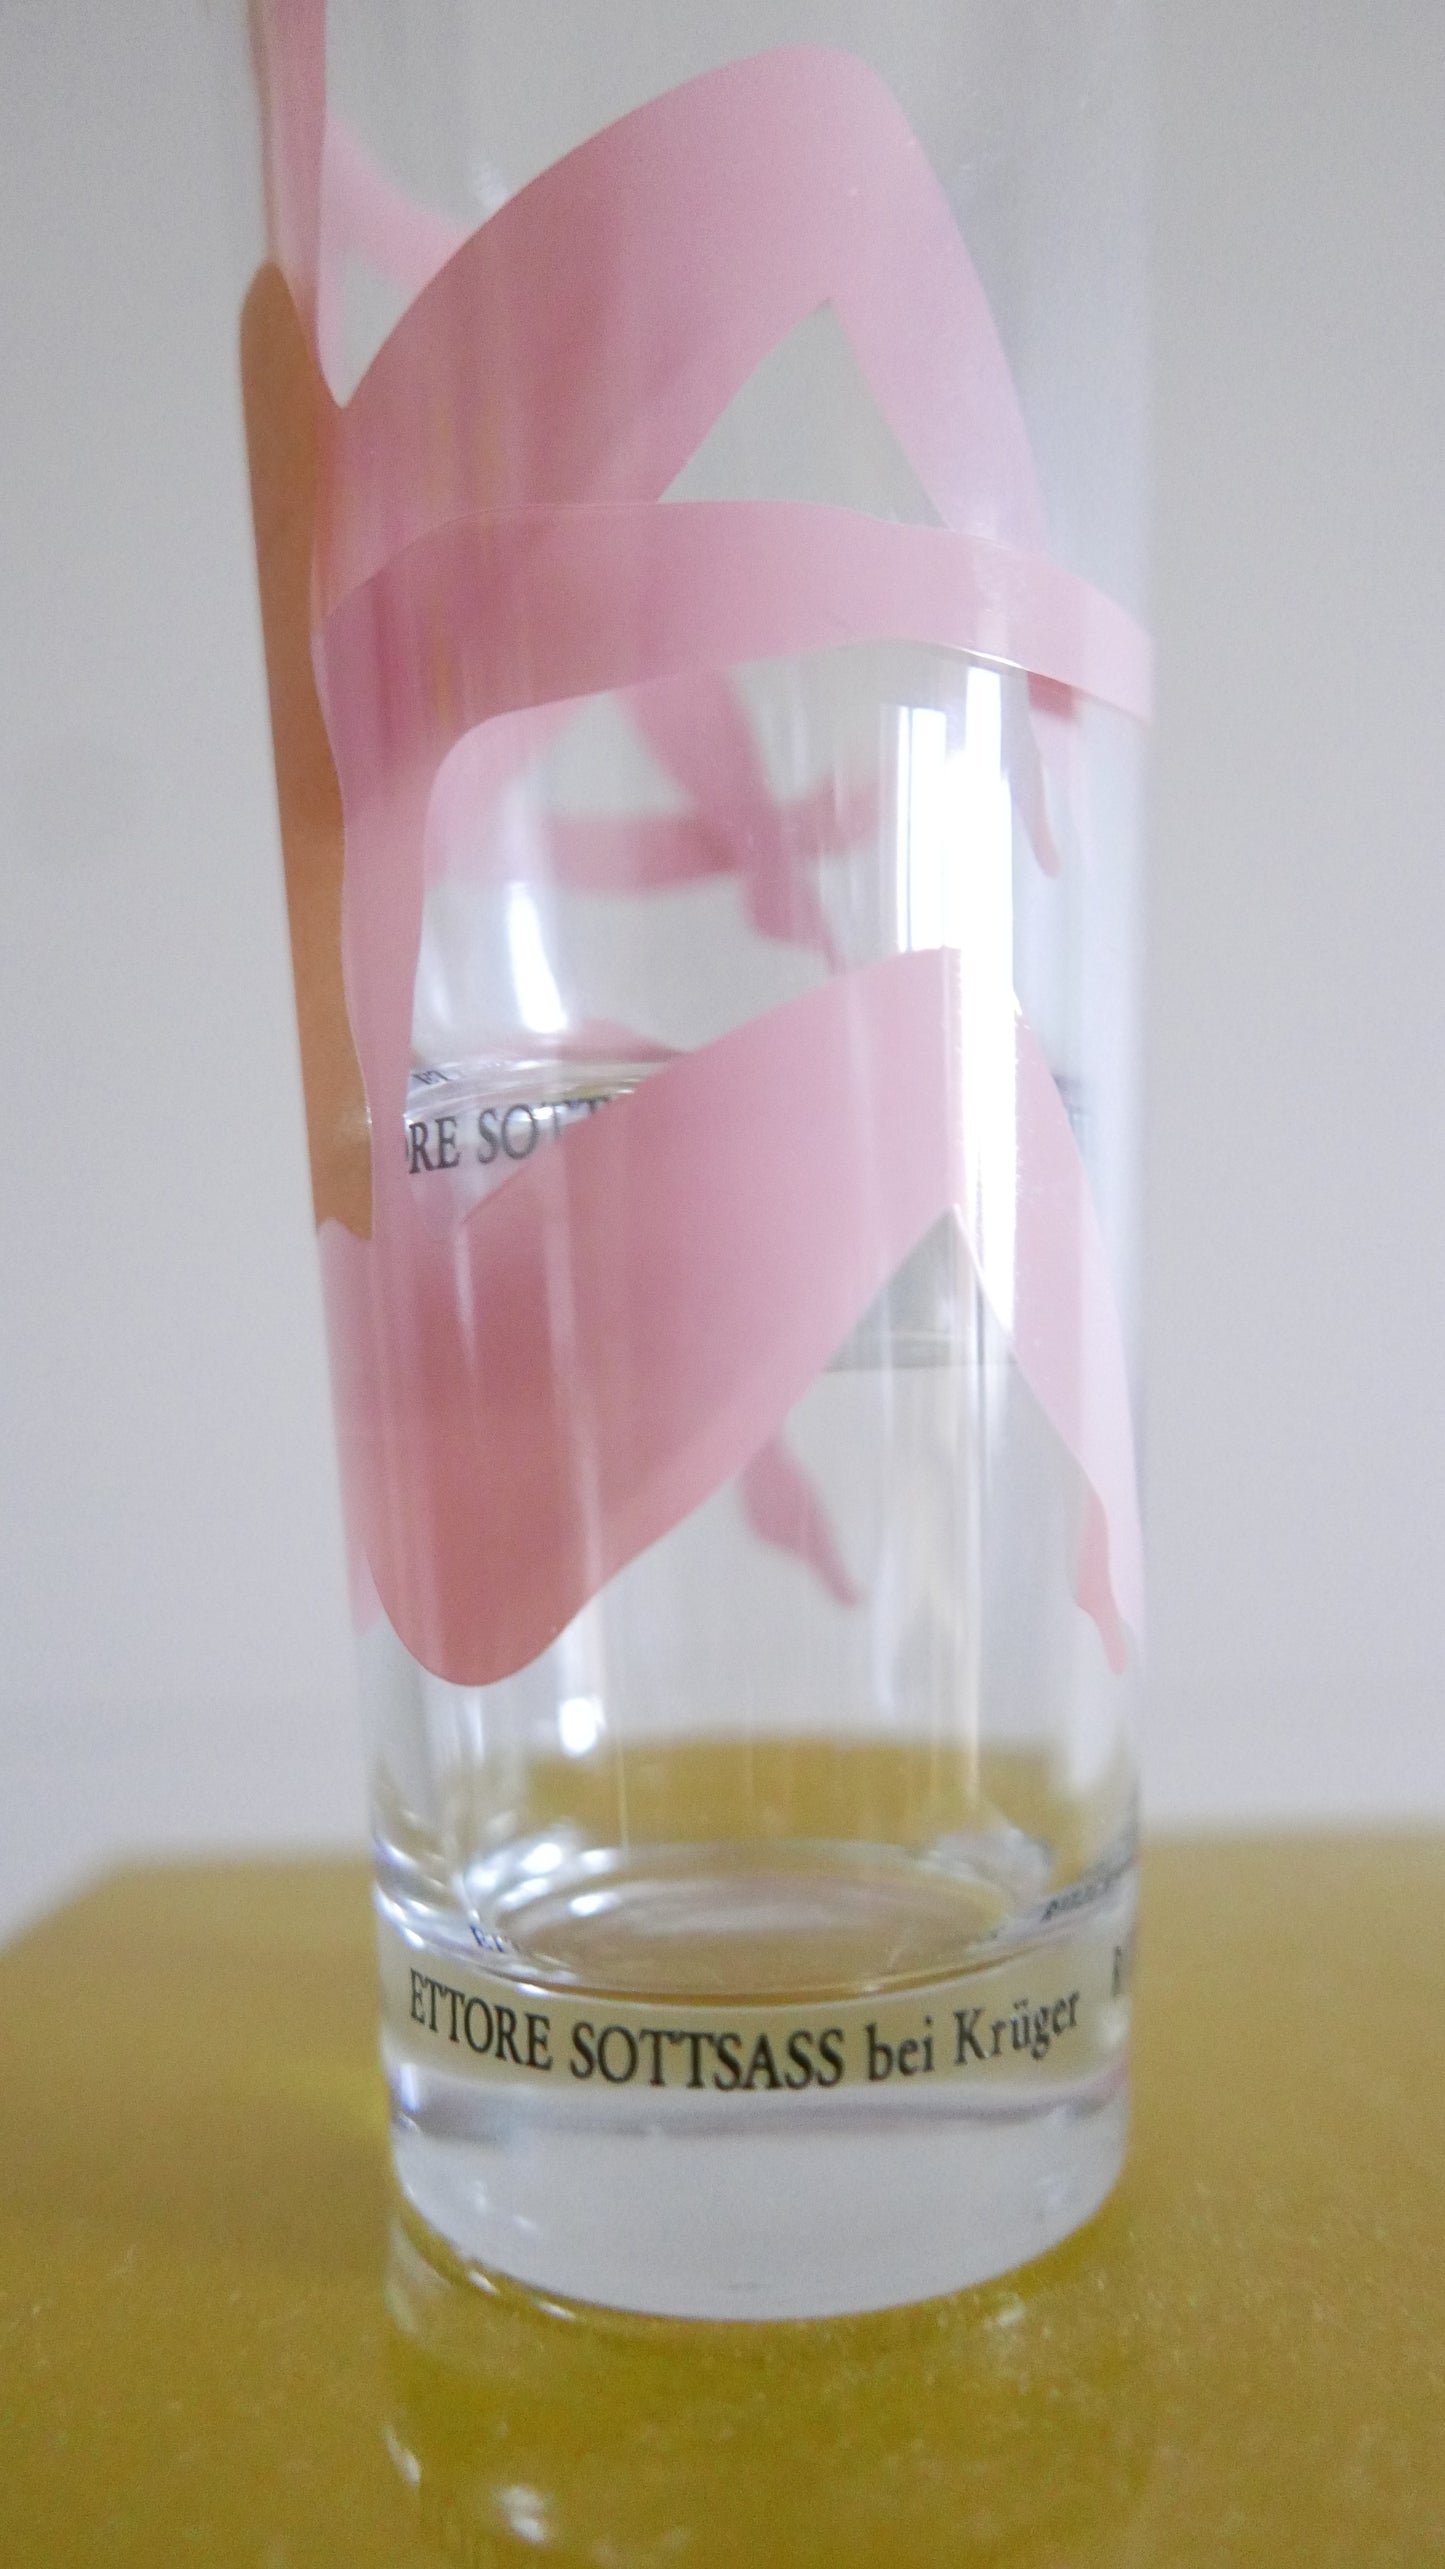 Milk glass by Ettore Sottsass for Krüger, 1995